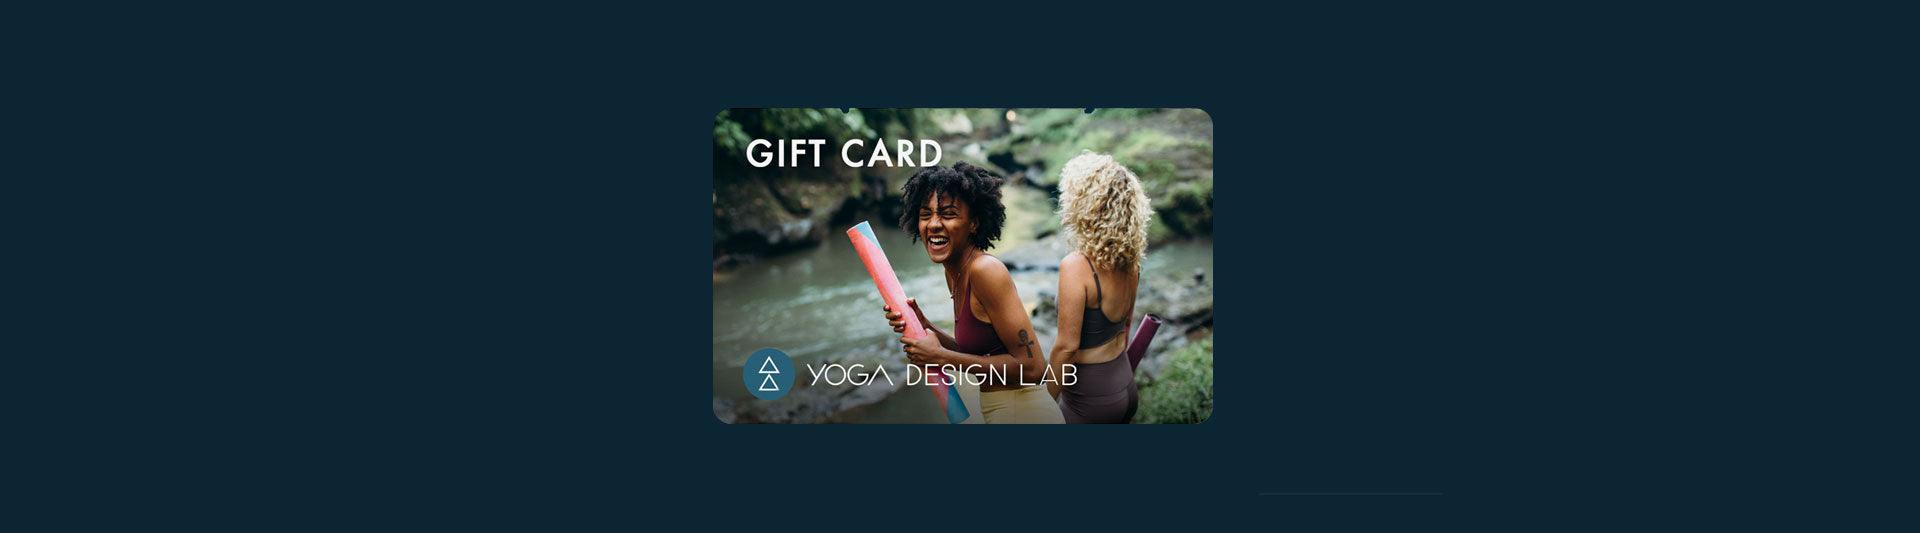 Gift Cards - Yoga Design Lab 